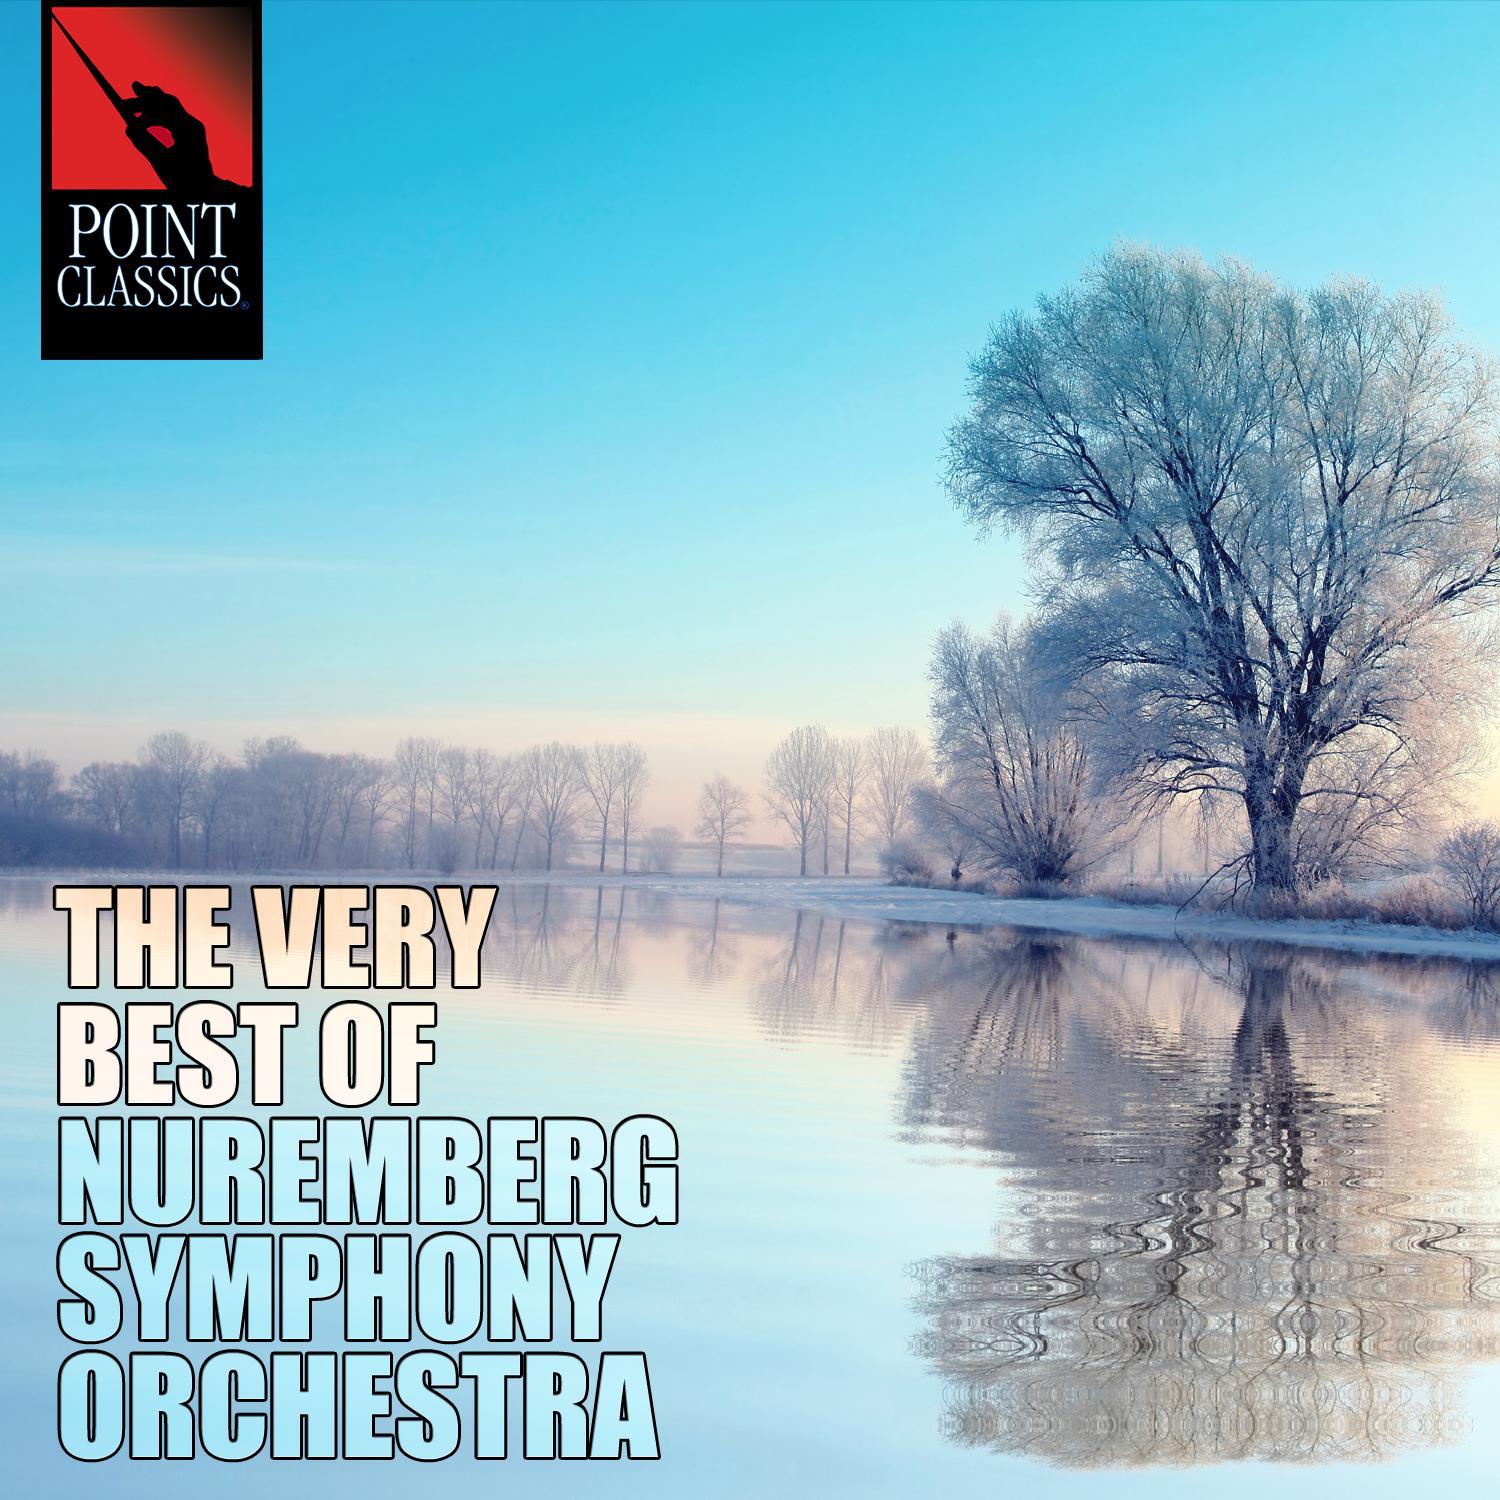 The Very Best of Nü remberg Symphony Orchestra  50 Tracks